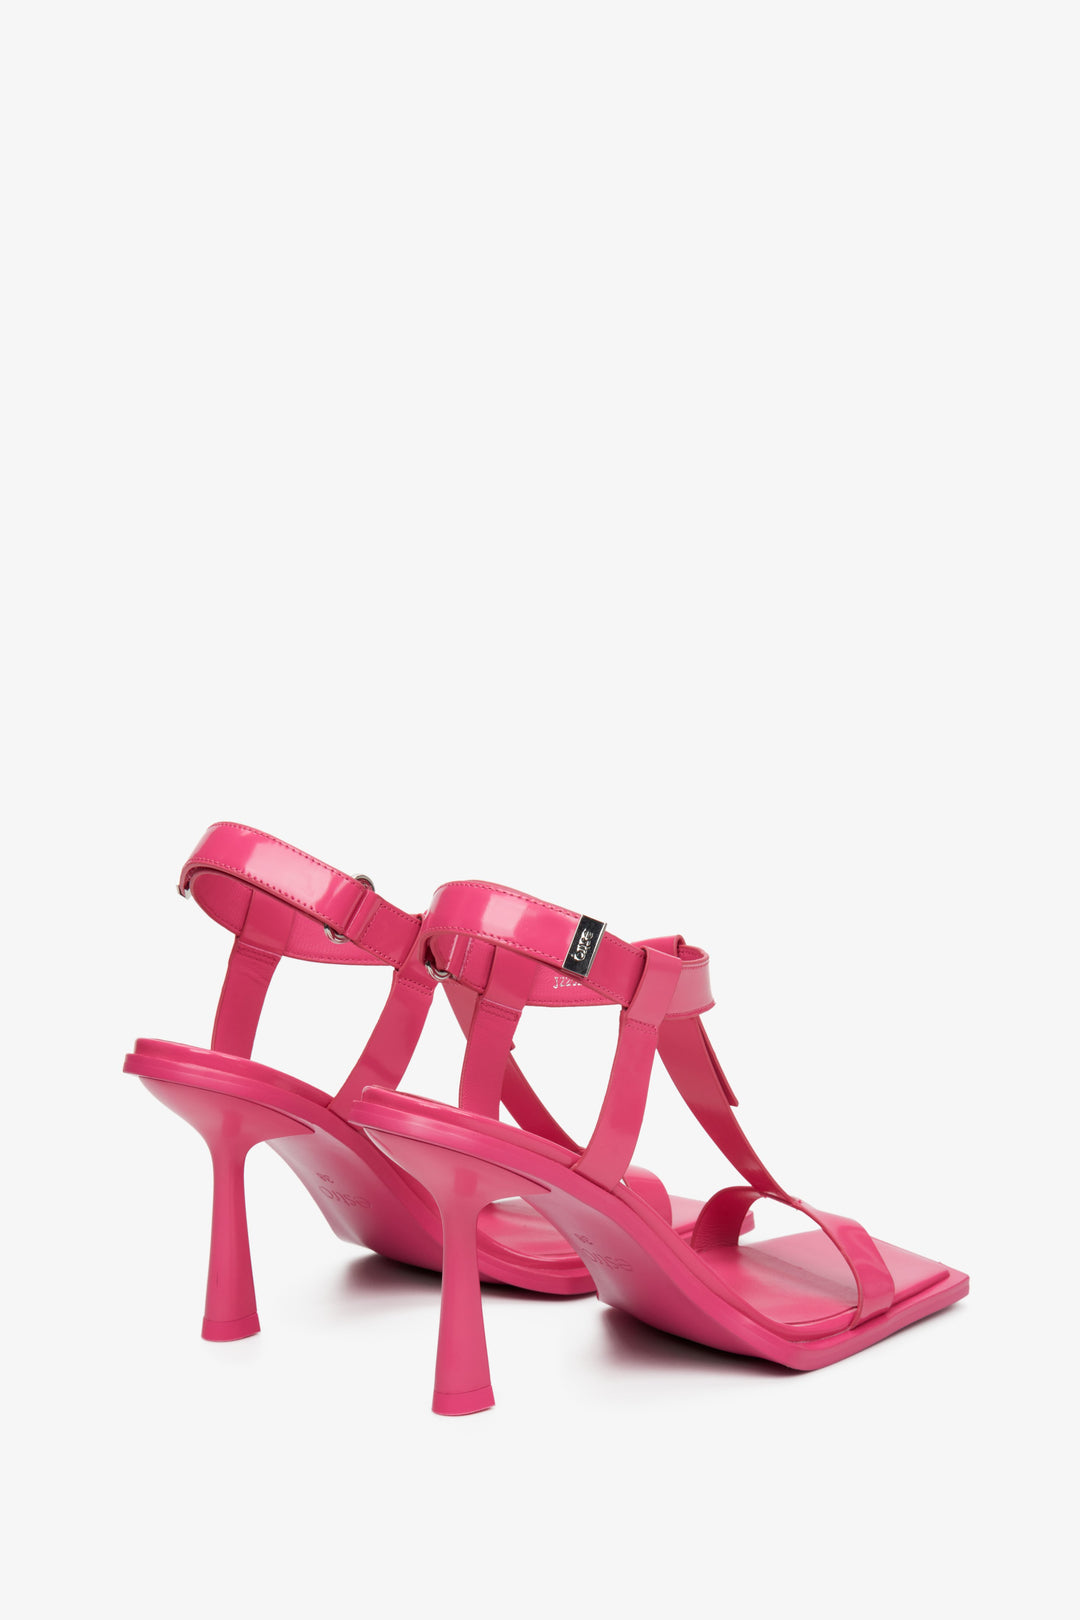 Pink women's heeled t-bar sandals, Estro brand.